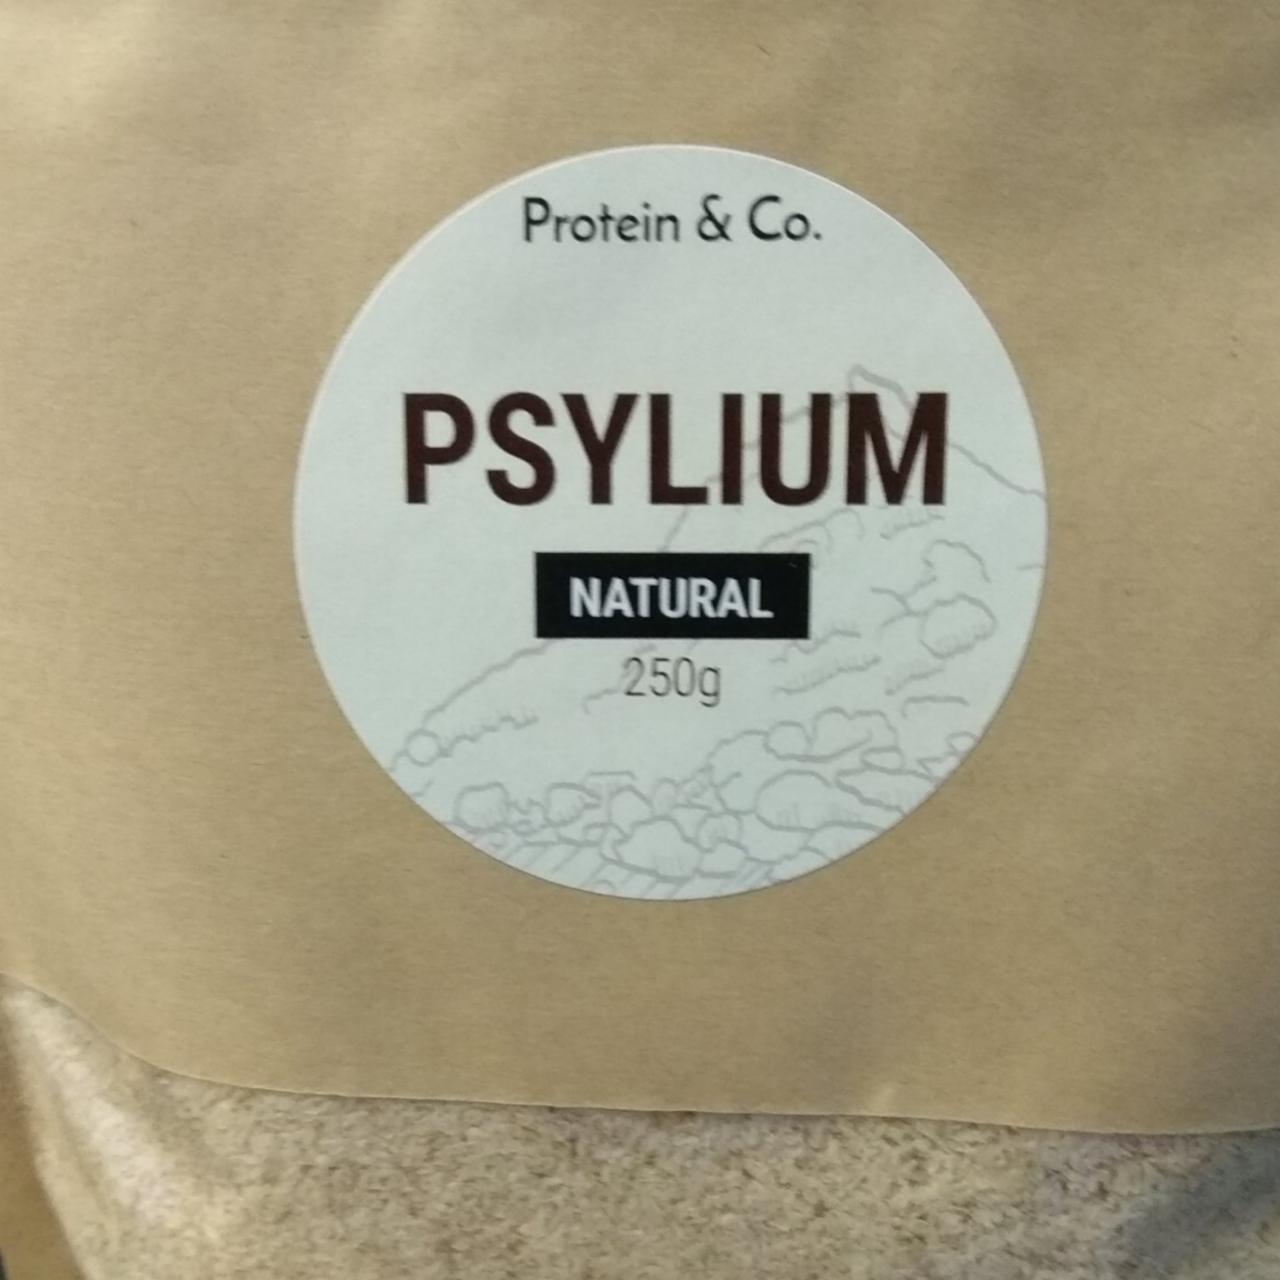 Fotografie - Psylium Natural Protein & Co.